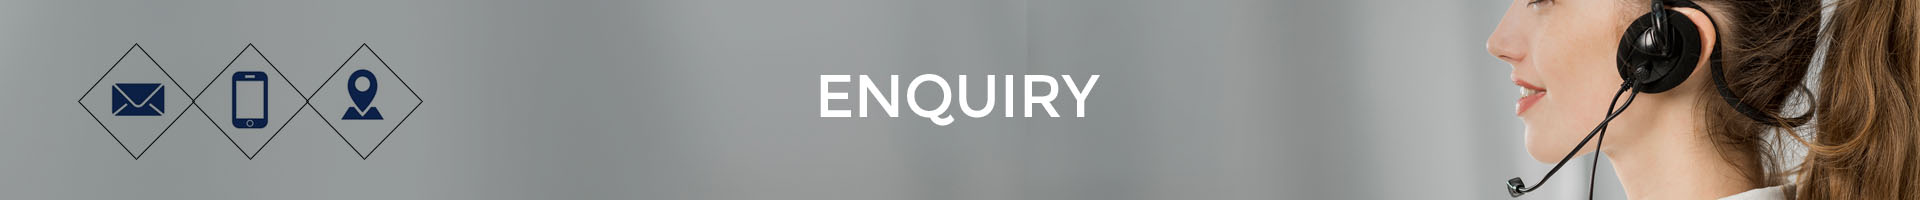 enquiry-banner